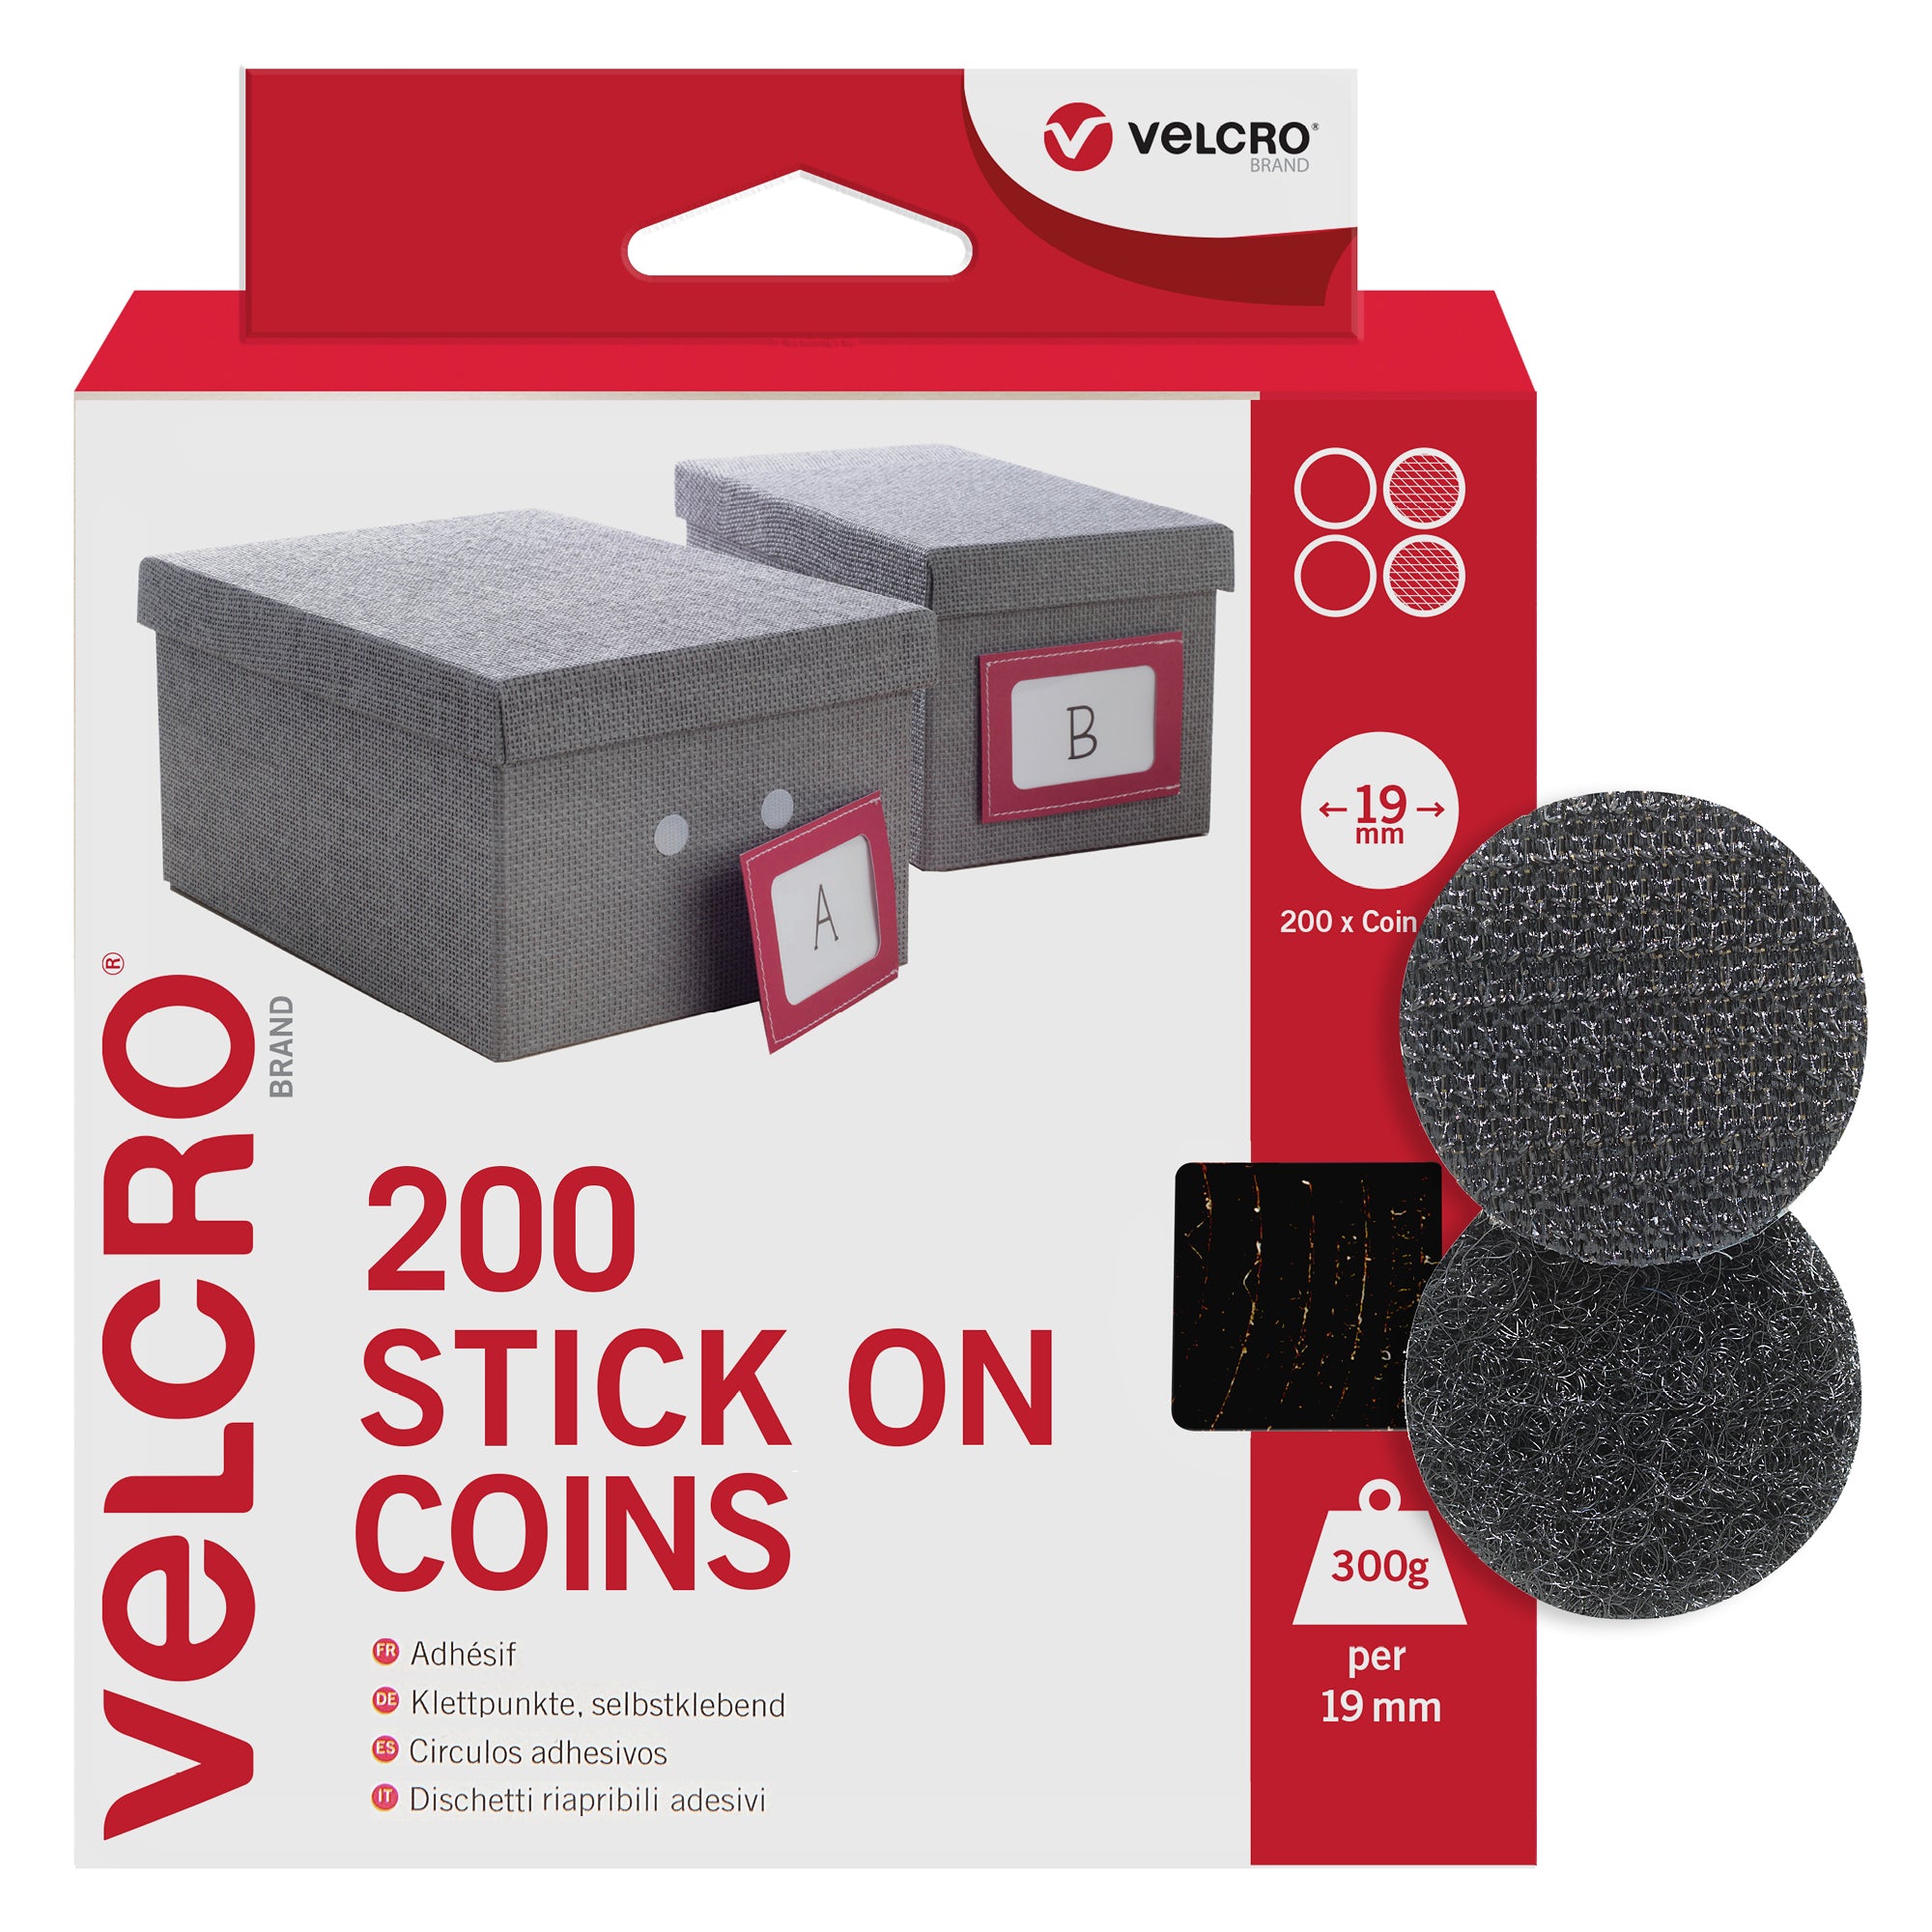 Best Velcro Supplier in UAE : u/dotstradinguae